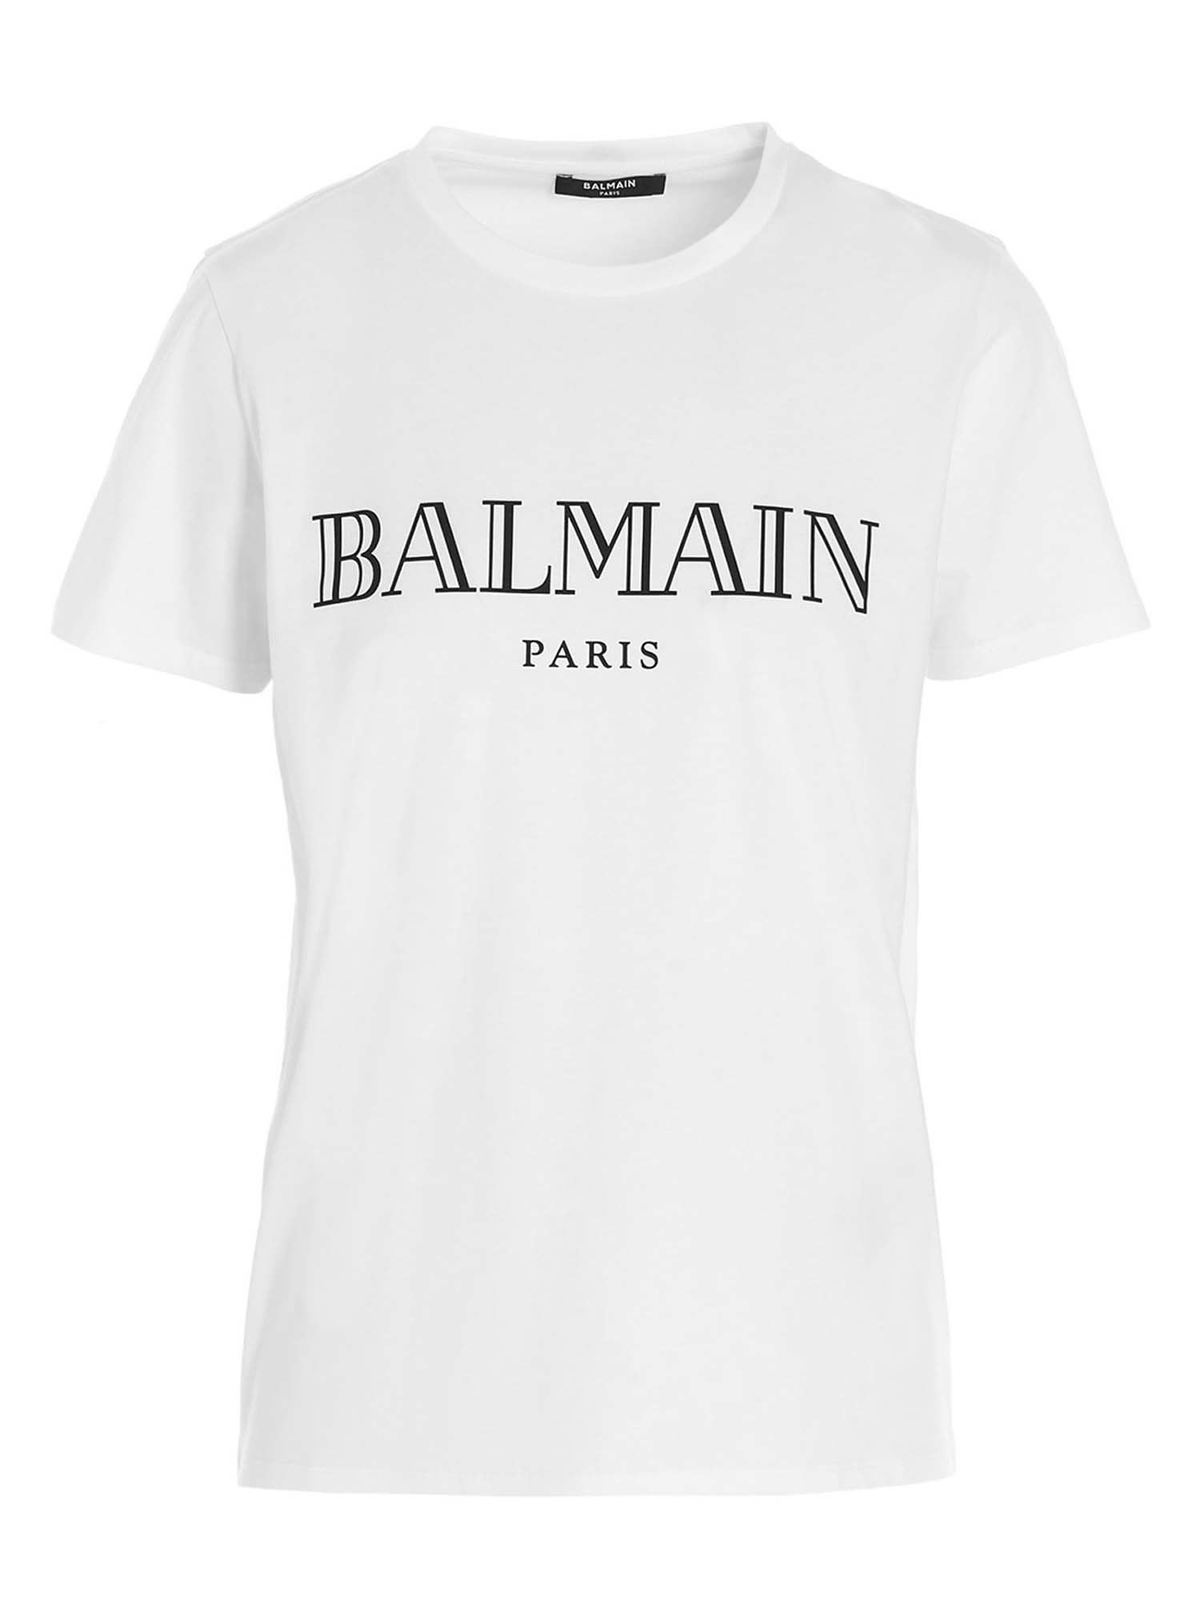 BALMAIN BLACK LOGO PRINT T-SHIRT IN WHITE